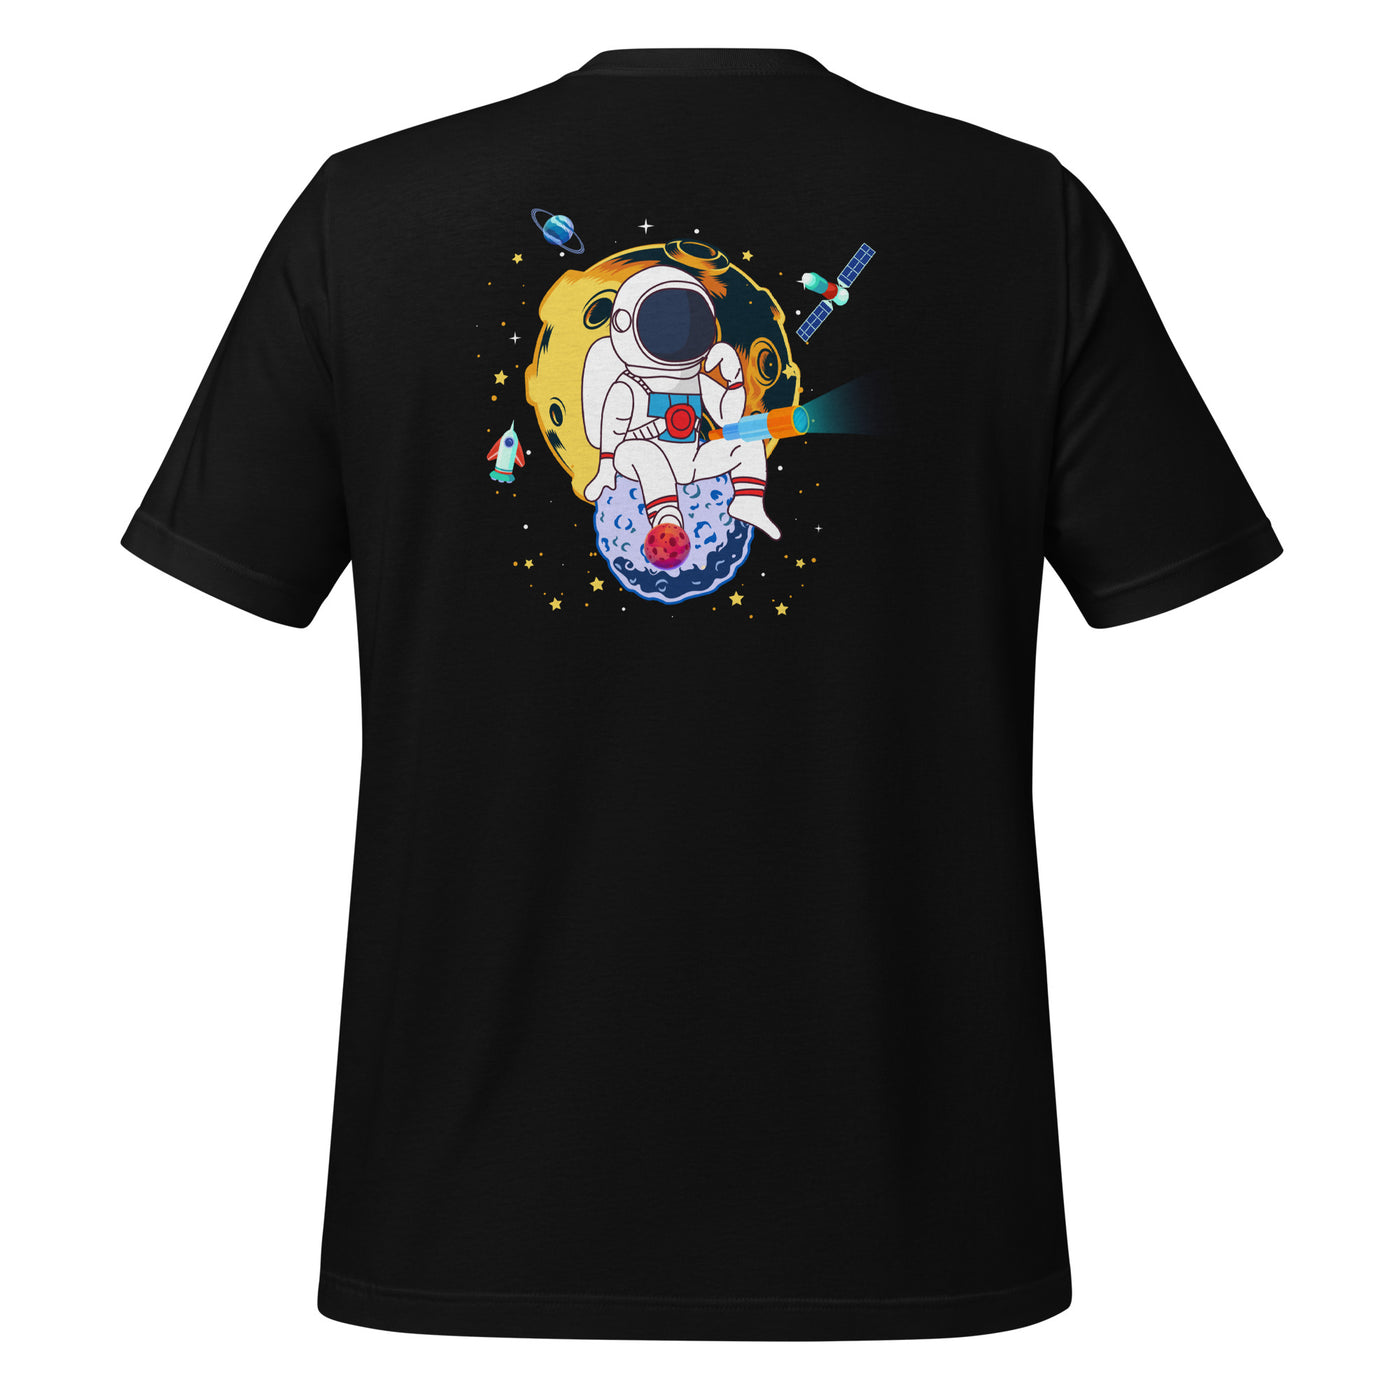 Astranaut catching stars - Unisex t-shirt  ( Back Print )